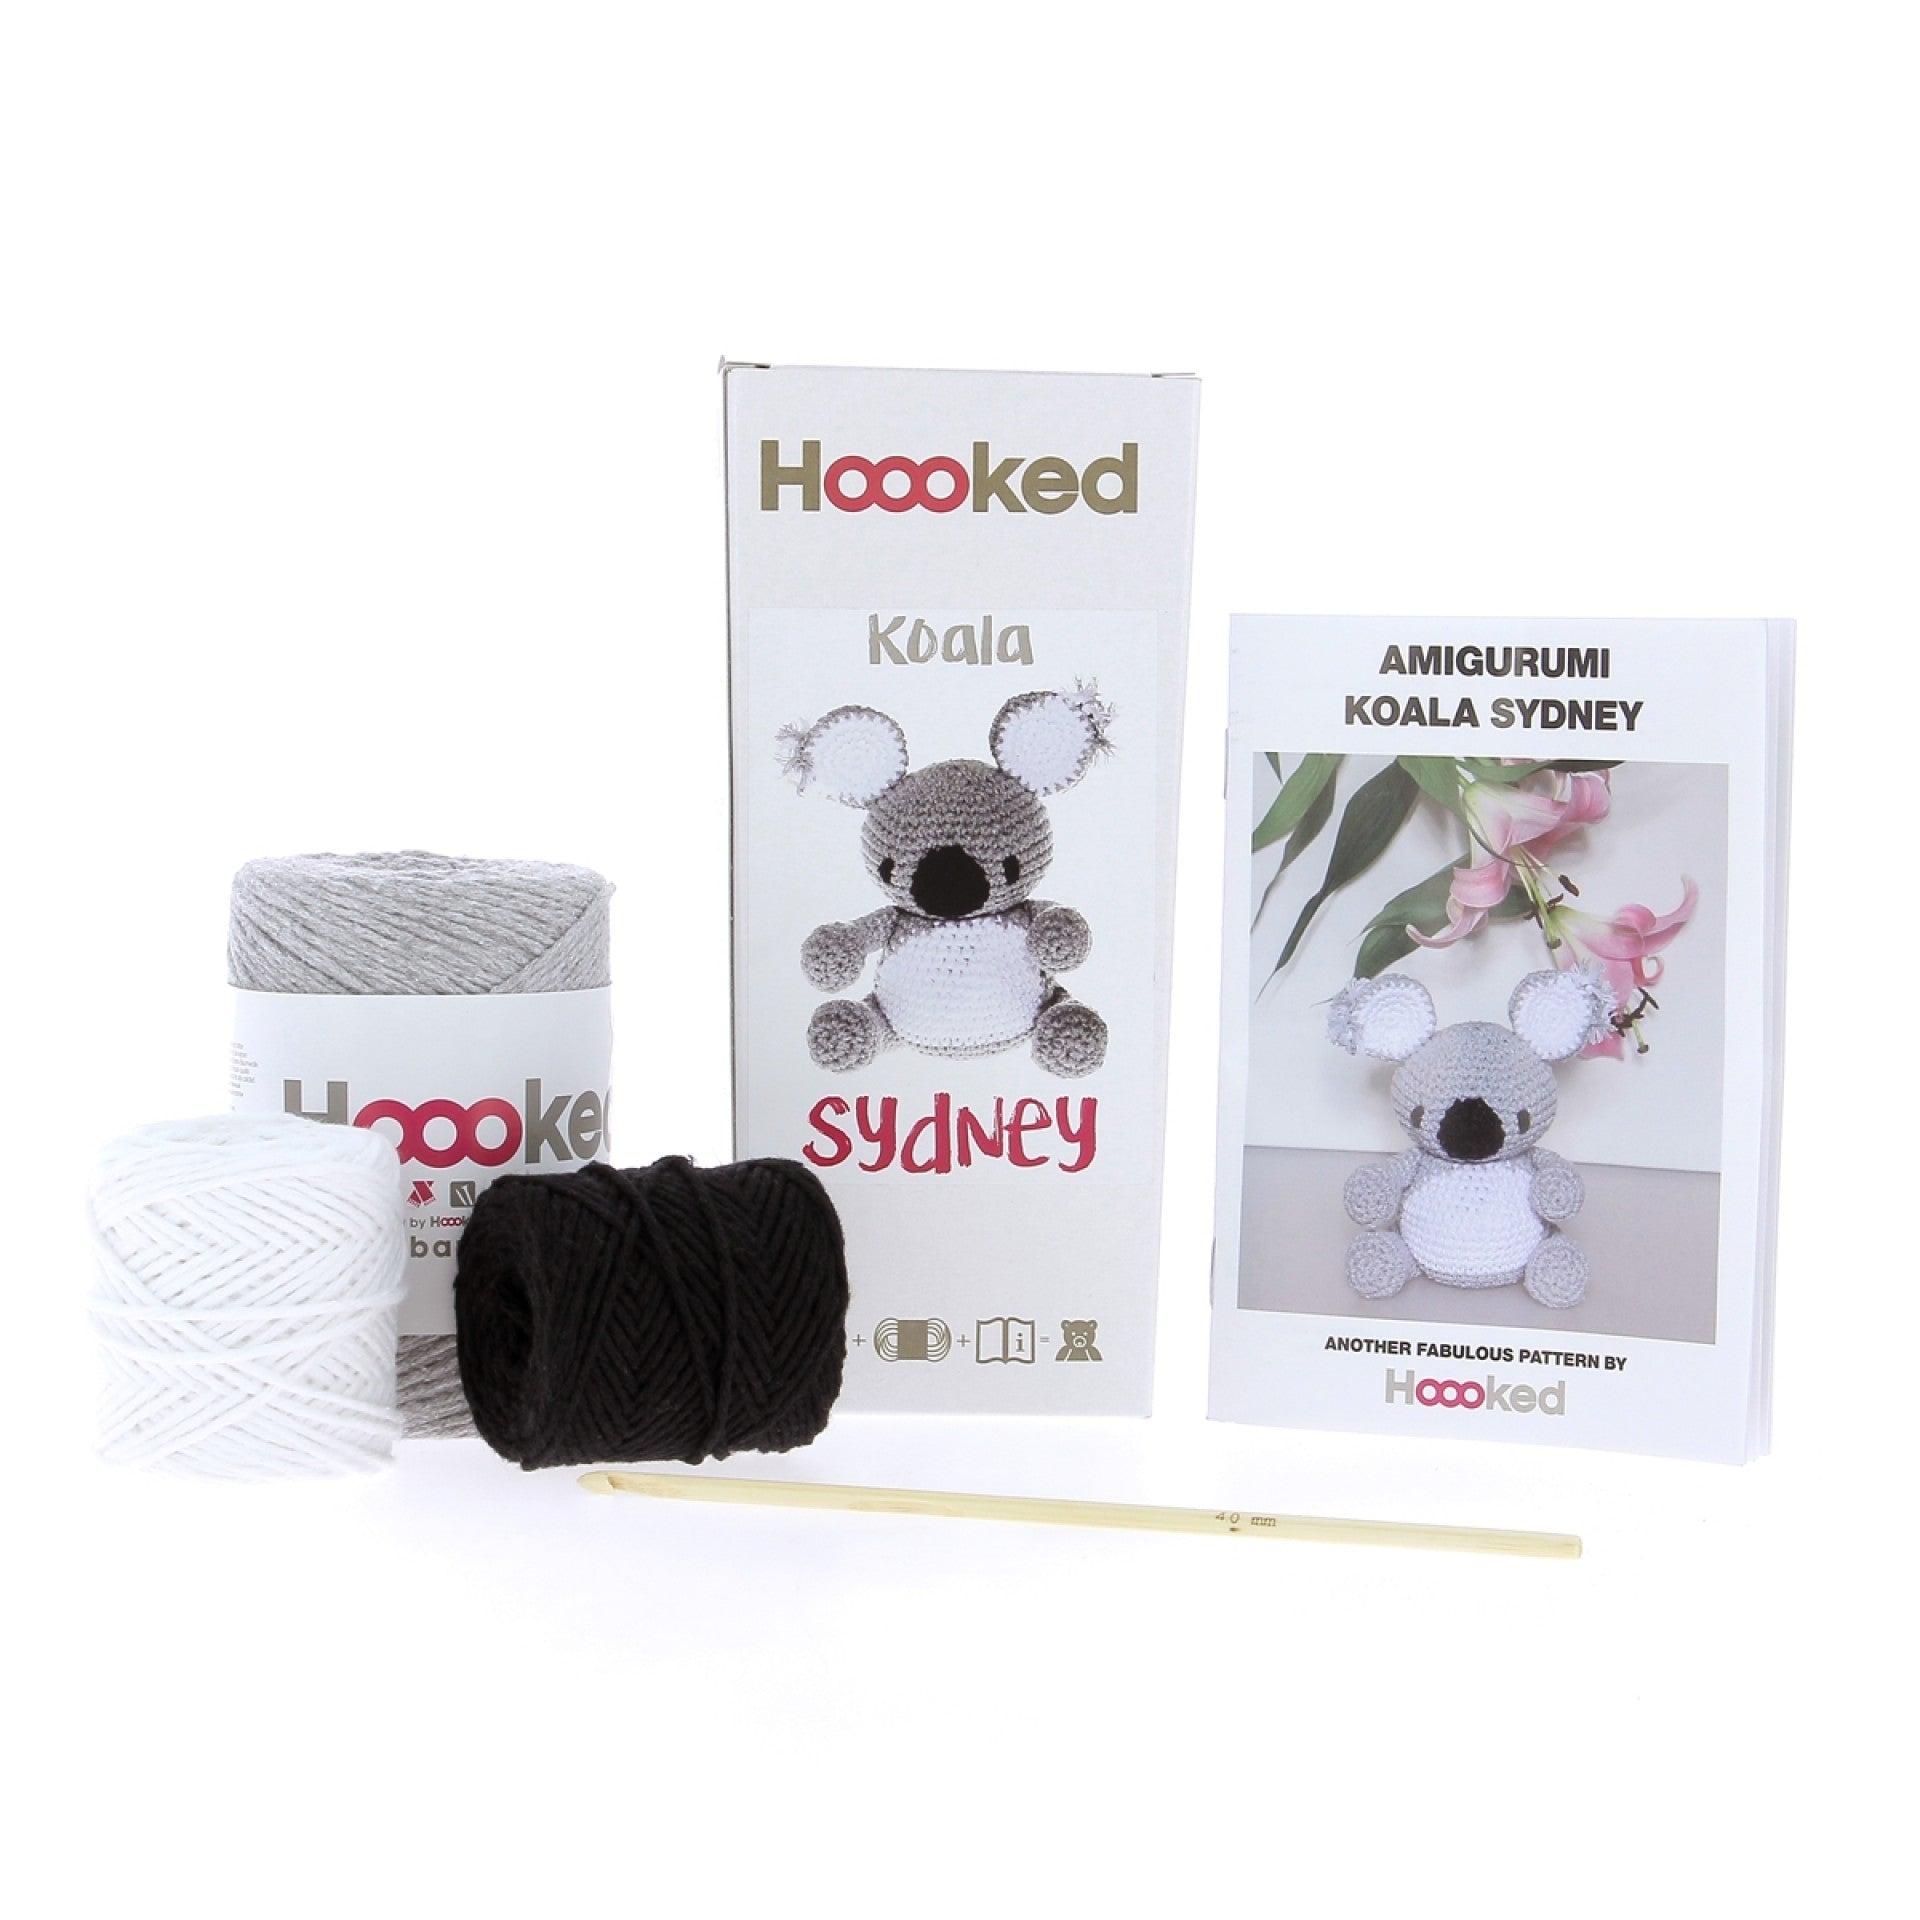 Koala Sydney Hoooked Crochet Kit with Eco Barbante Yarn